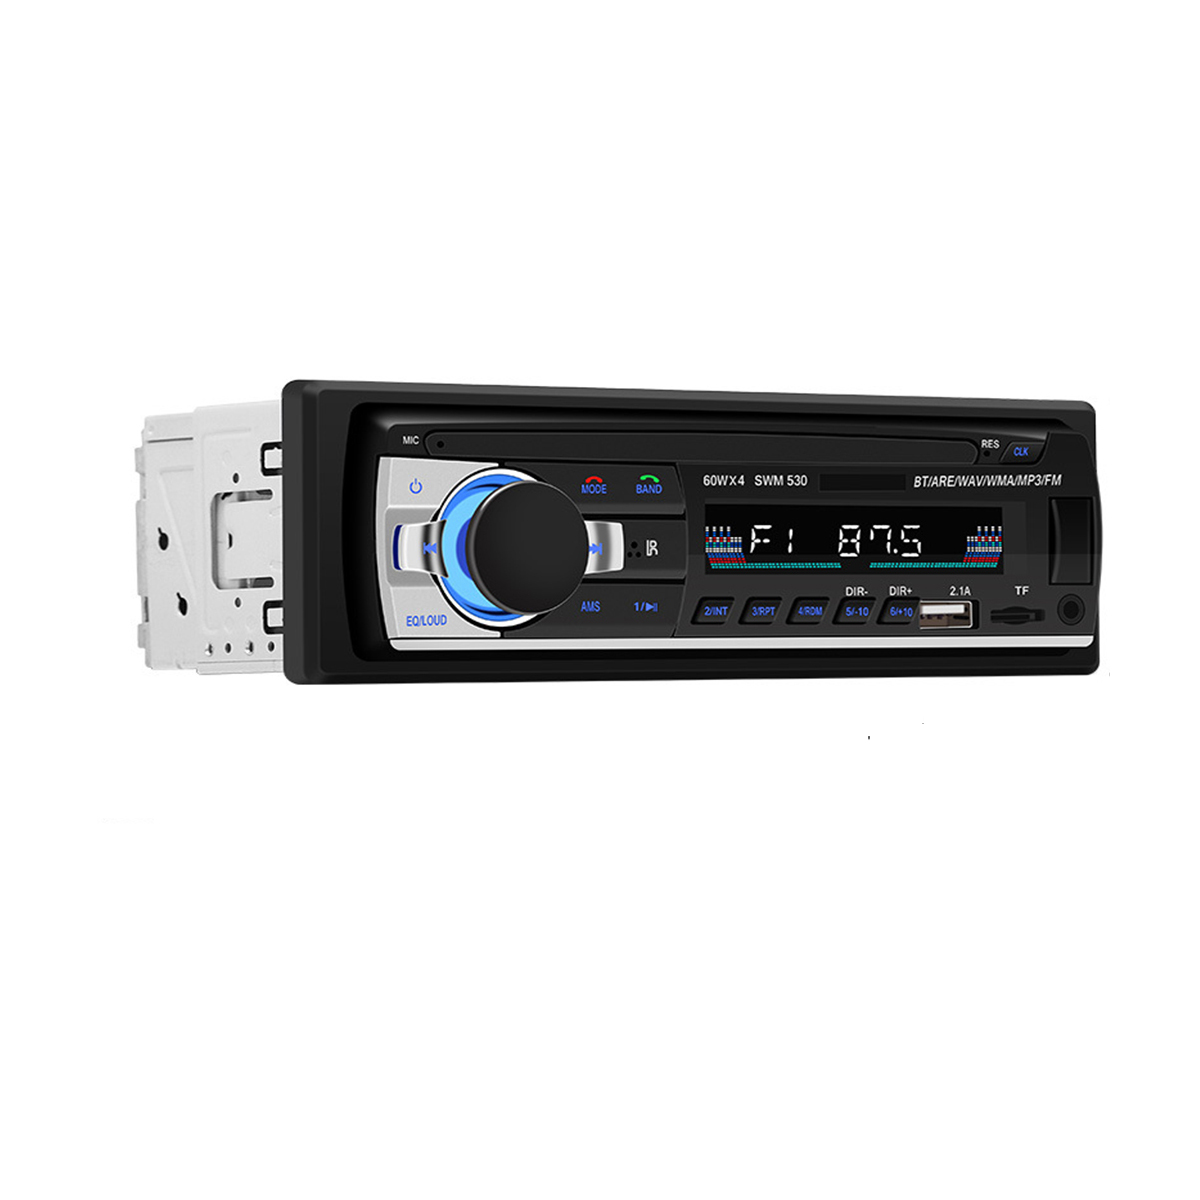 SWM-530 Car Radio Stereo MP3 ...